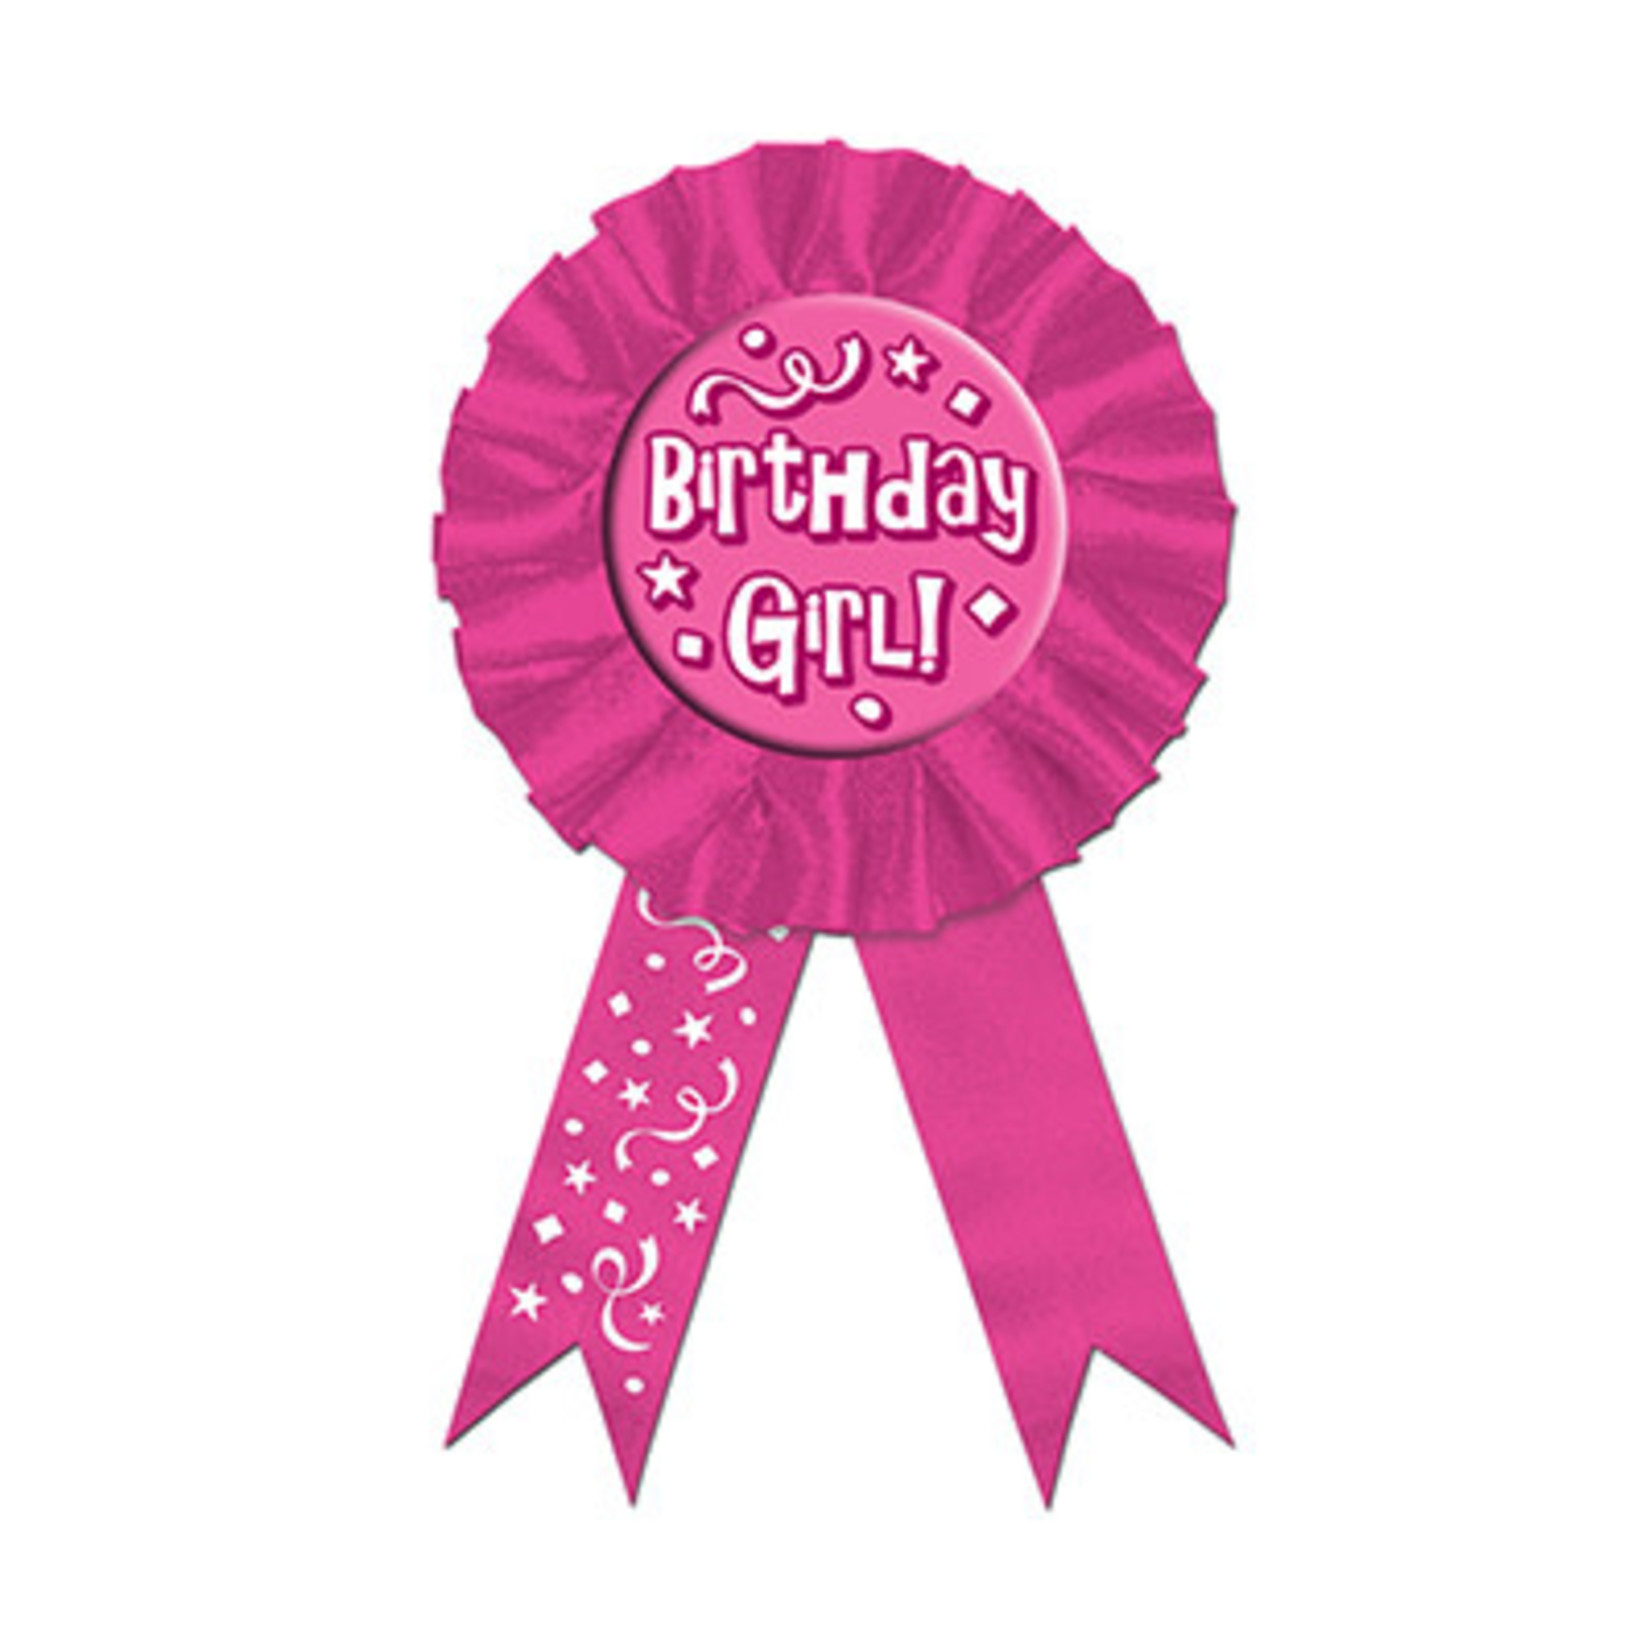 Beistle Birthday Girl! Pink Award Ribbon - 1ct.